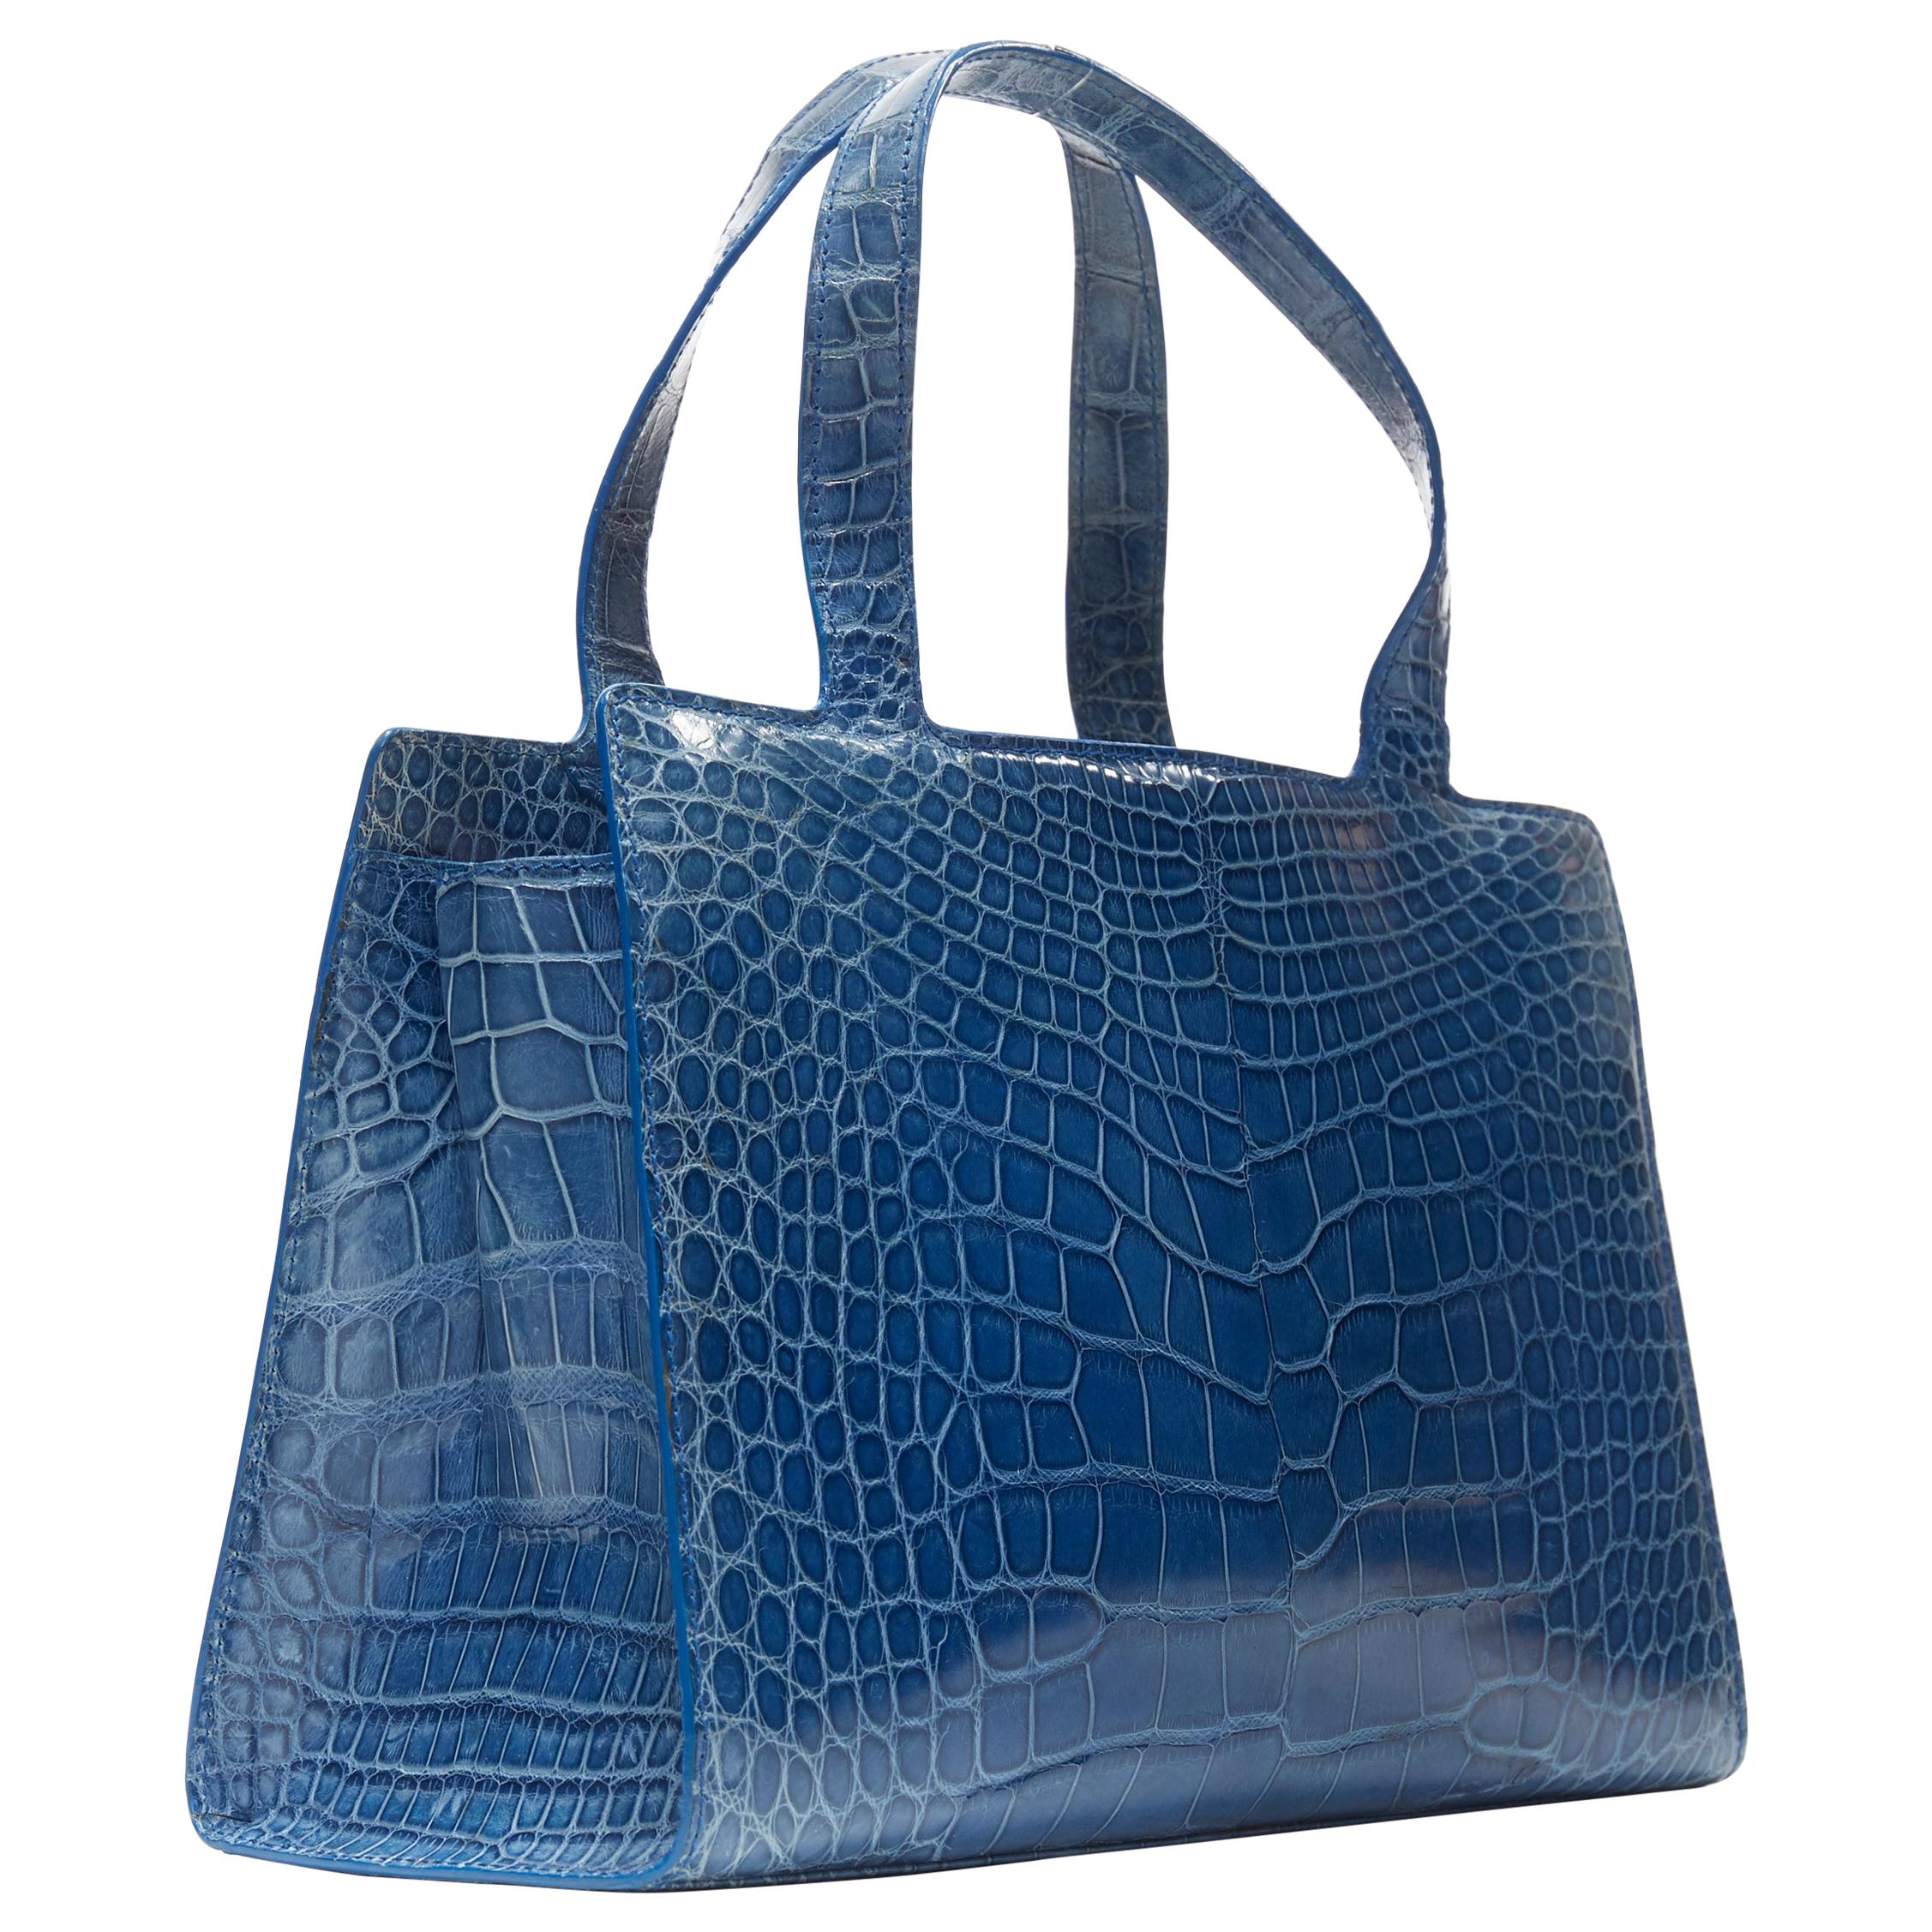 RALPH LAUREN blue crocodile leather top handle structured evening bag